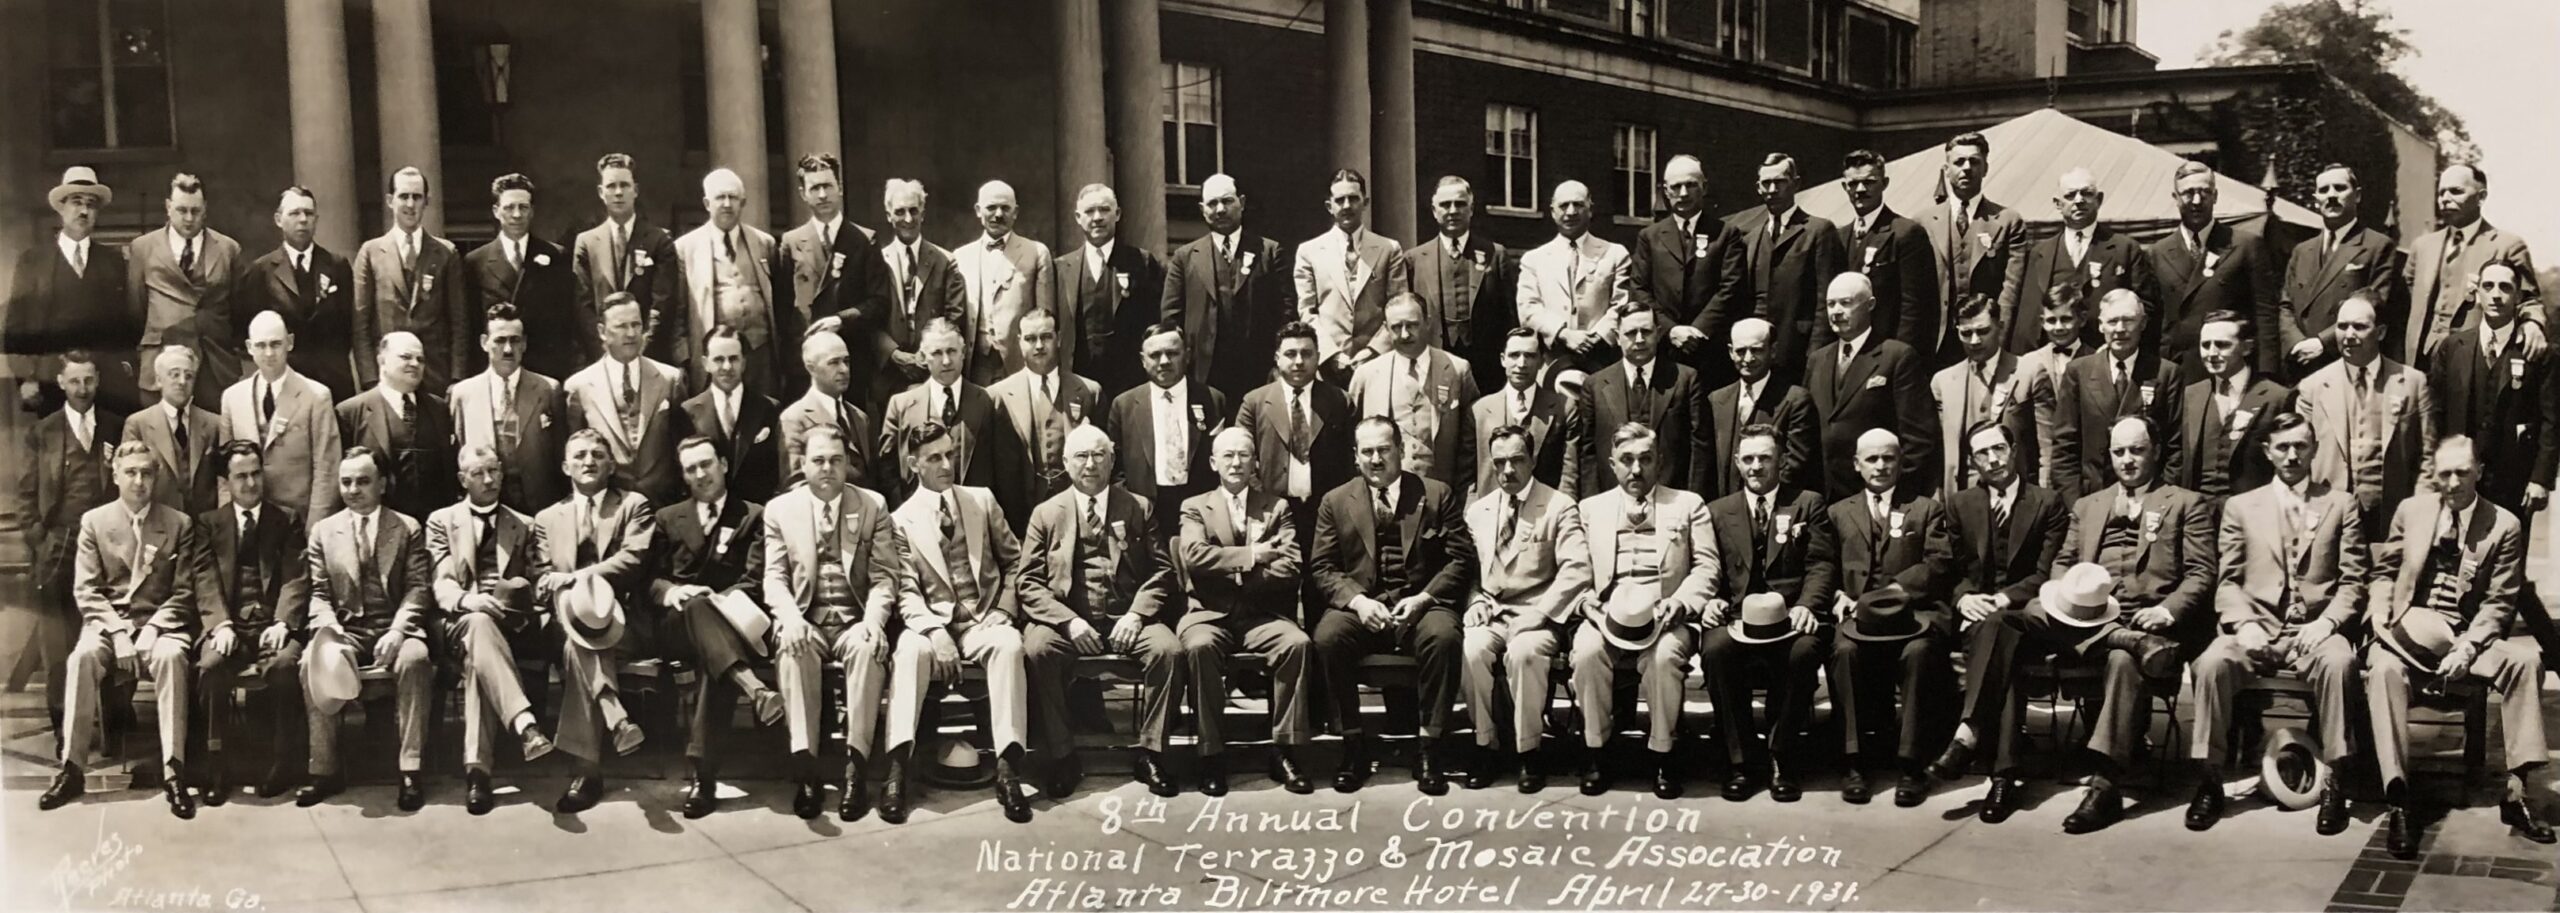 1931 8th Convention Contractors